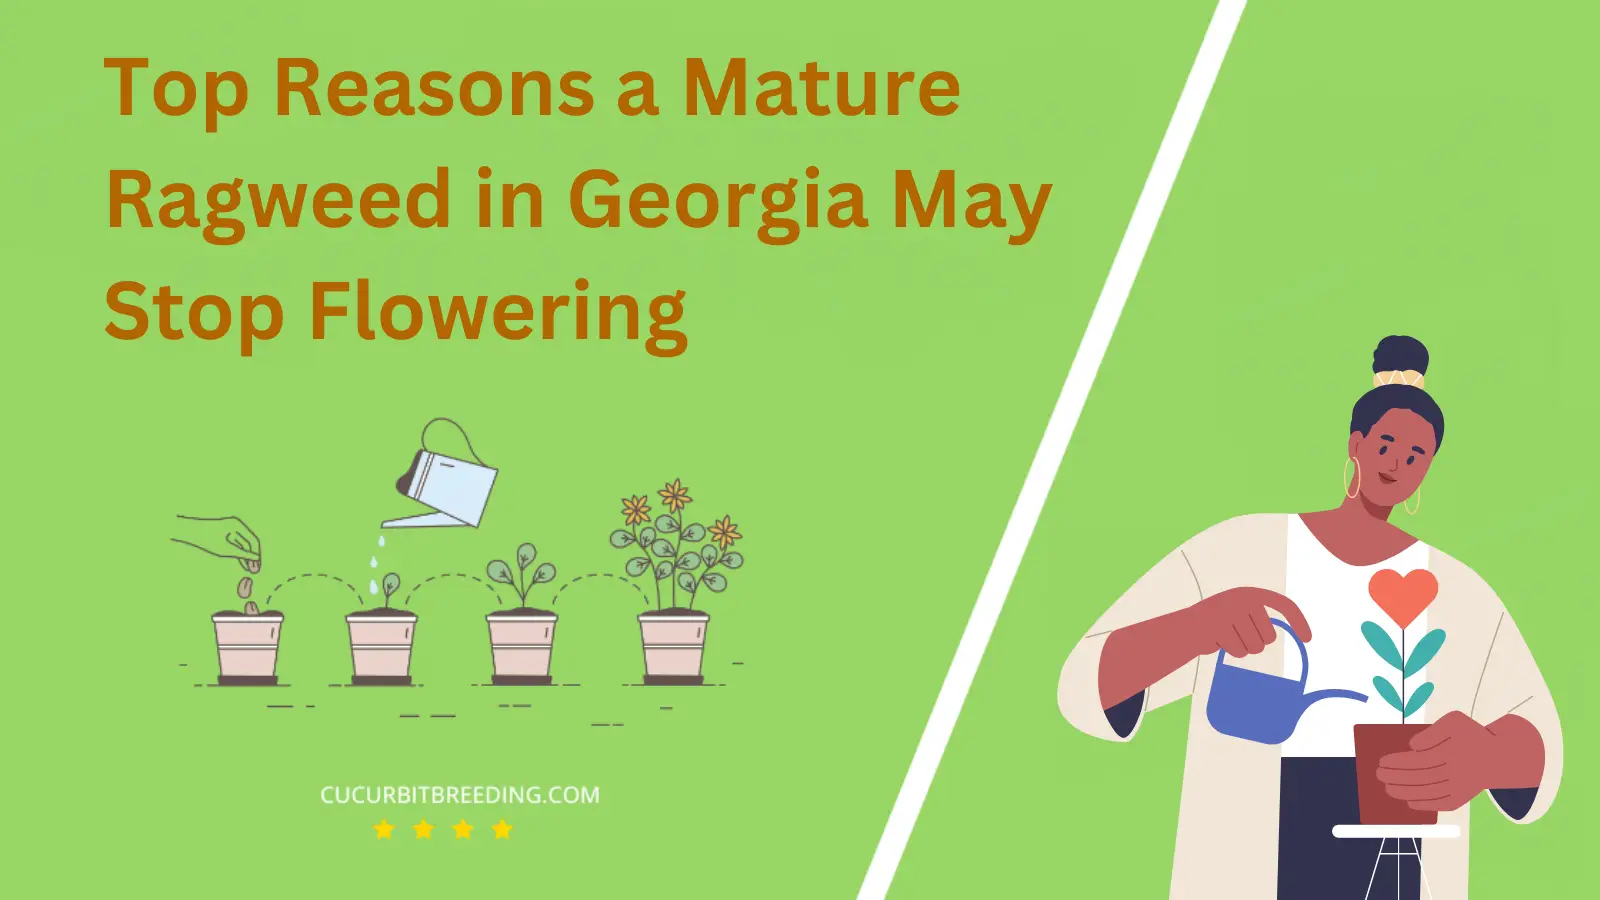 Top Reasons a Mature Ragweed in Georgia May Stop Flowering